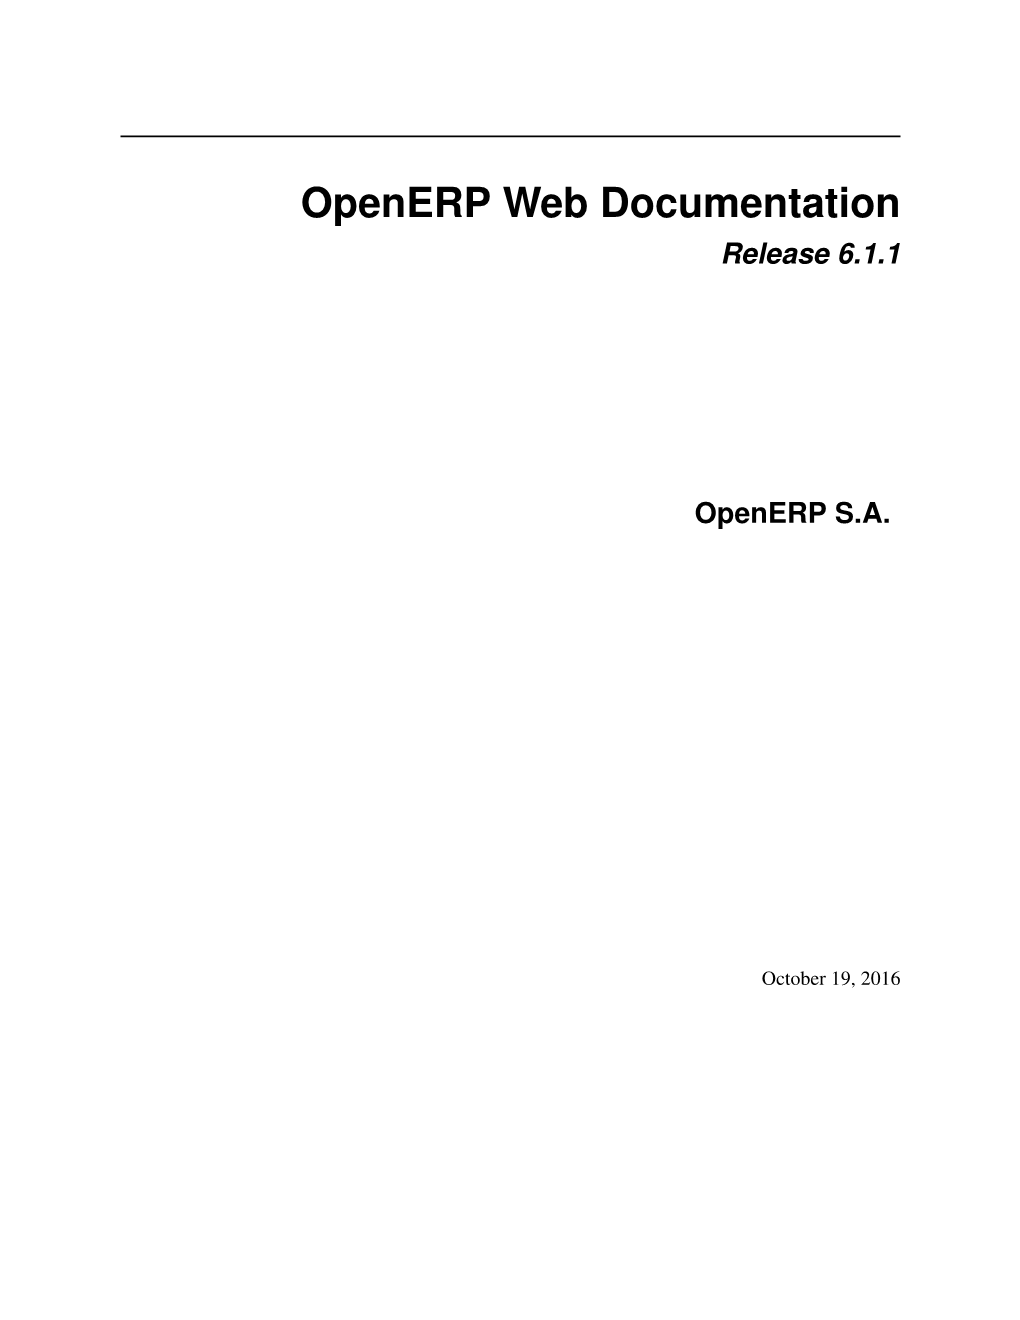 Openerp Web Documentation Release 6.1.1 Openerp SA